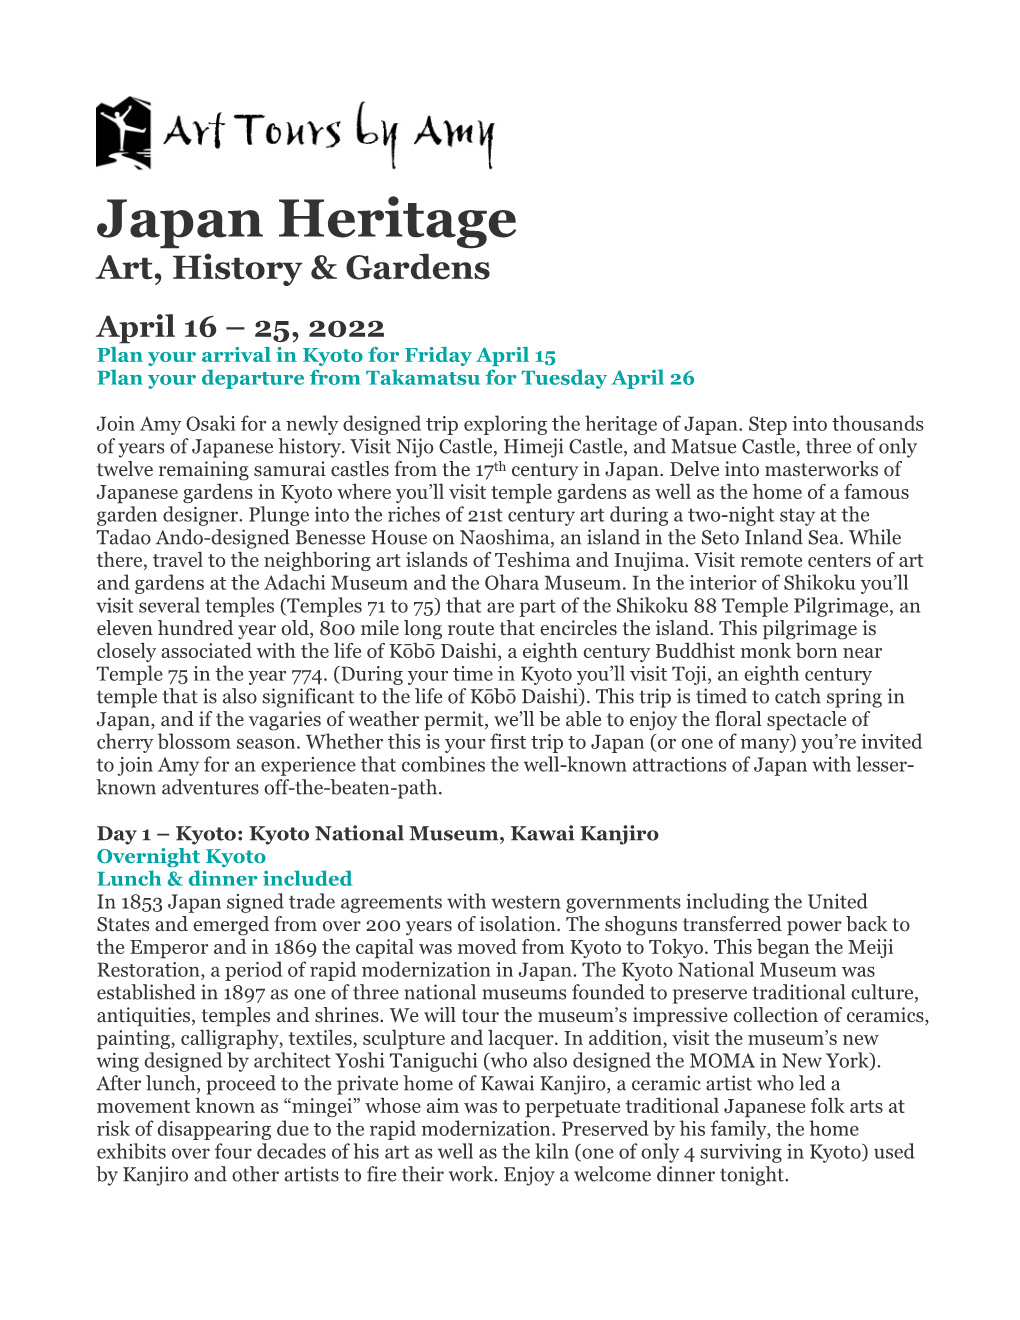 Japan Heritage Art, History & Gardens